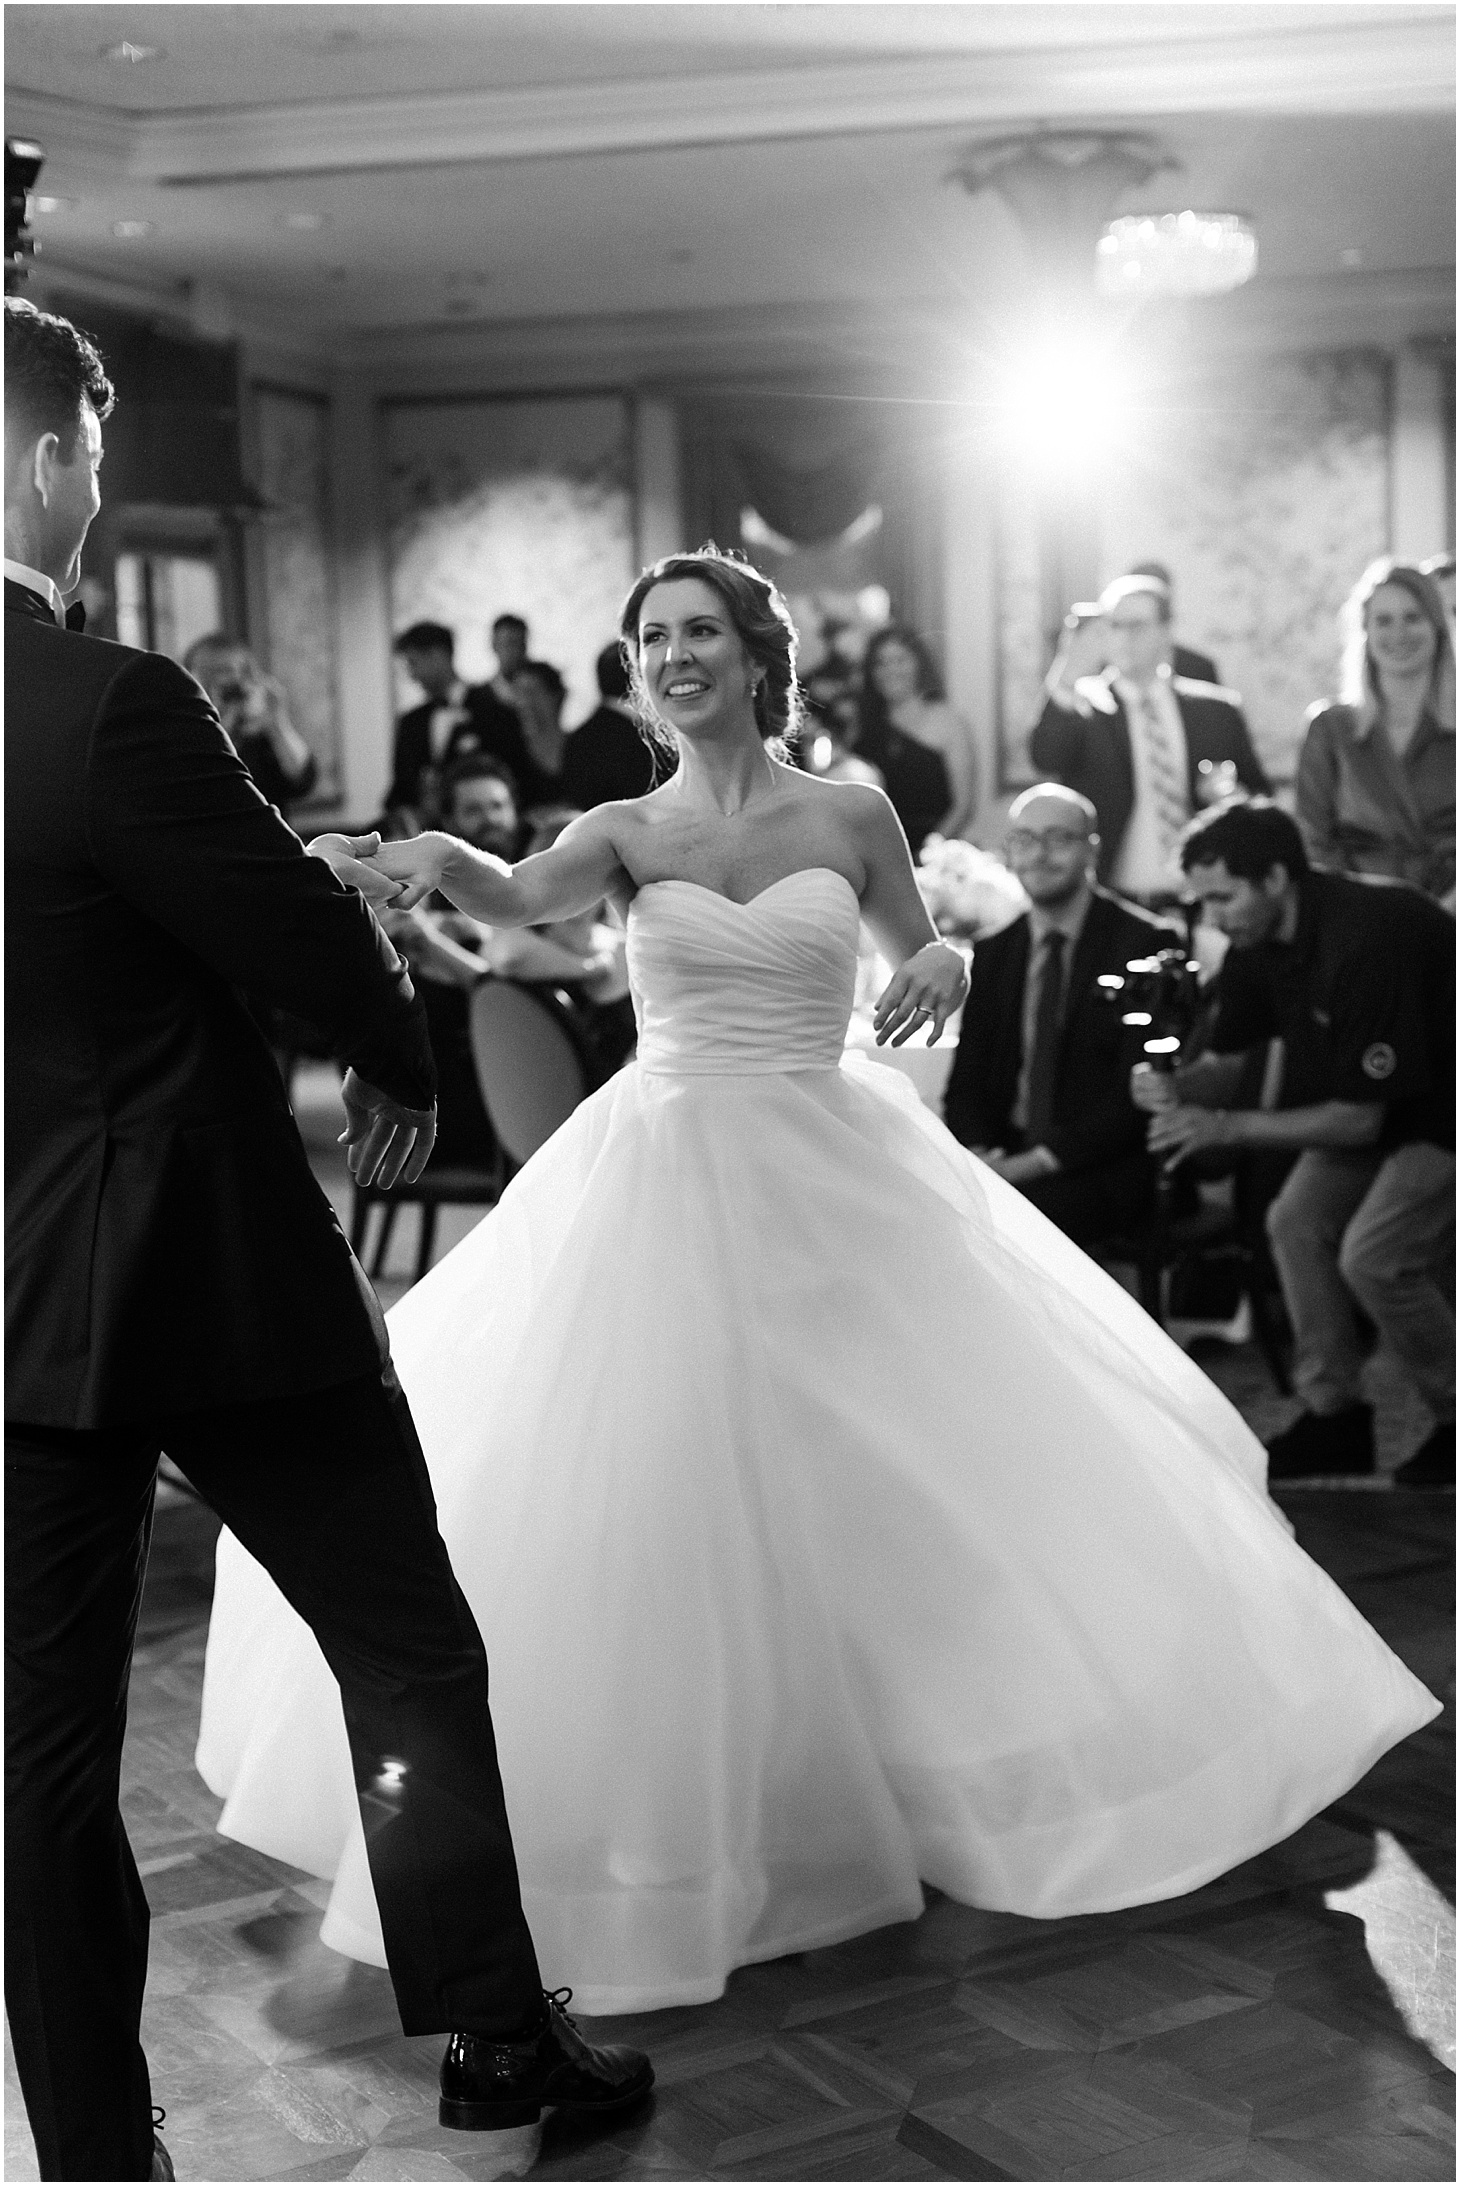 First Dance at the Williamsburg Inn | Wedding Ceremony at St. Olaf Catholic Church | Blush and Black Tie Wedding in Williamsburg, VA | Sarah Bradshaw Photography